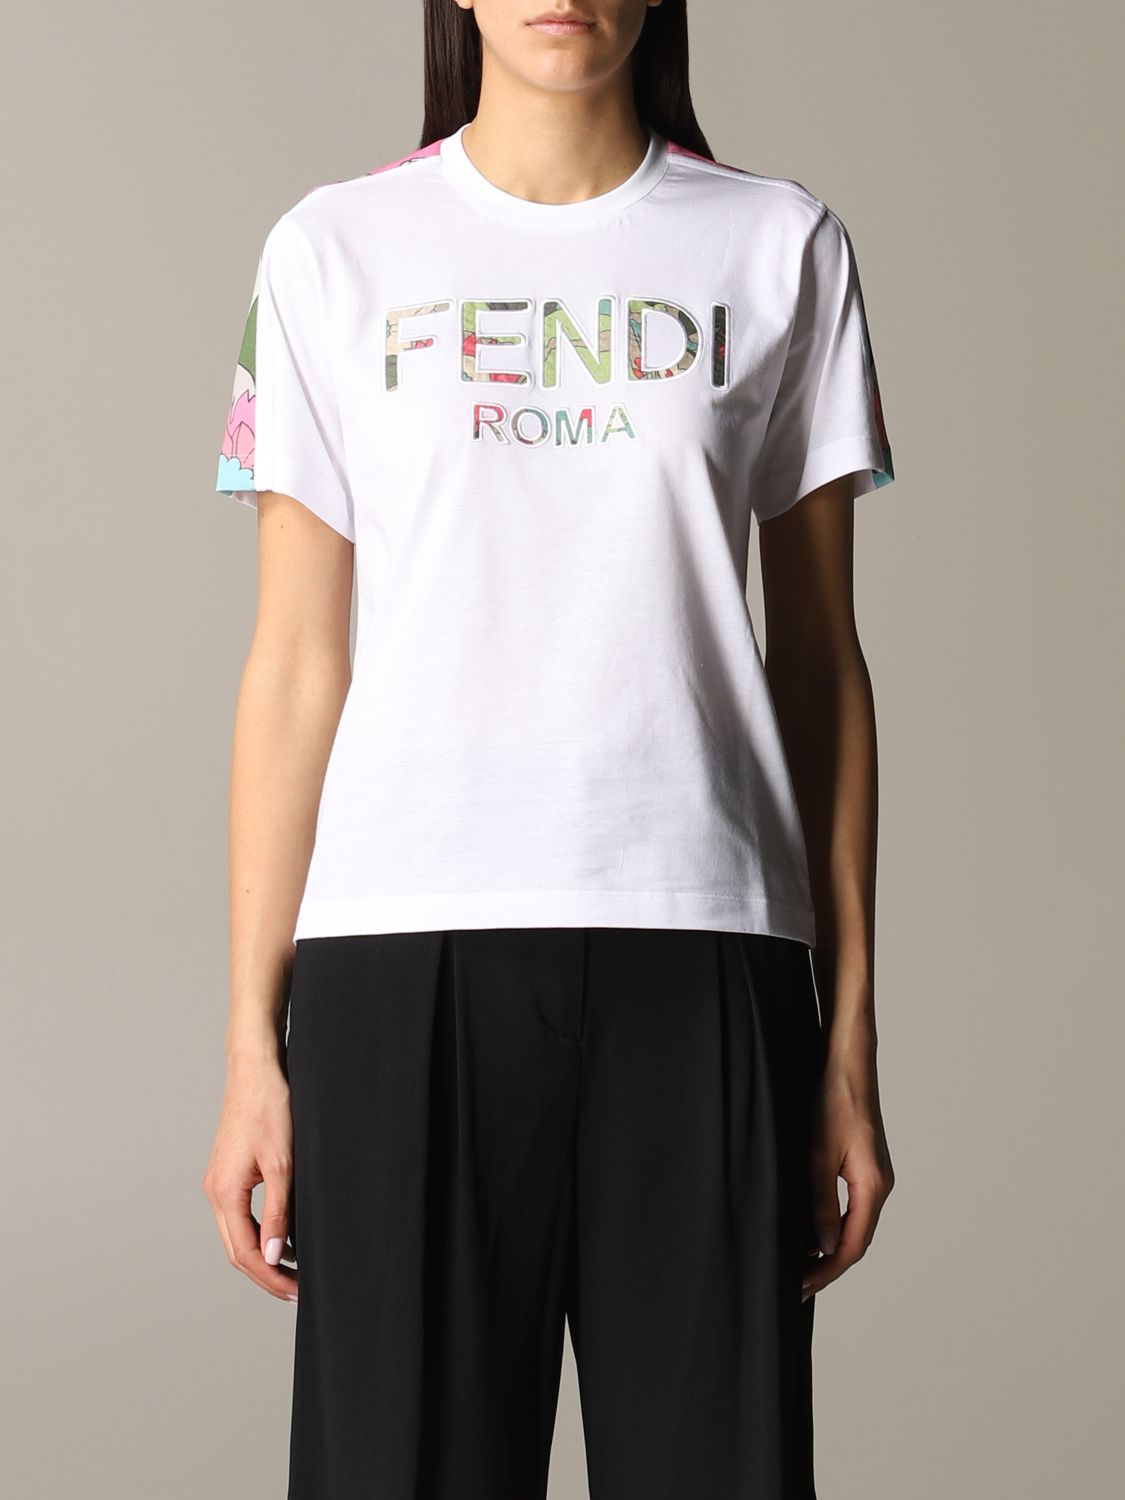 Fendi Logo Shirt Best Sale, 57% OFF | www.ingeniovirtual.com